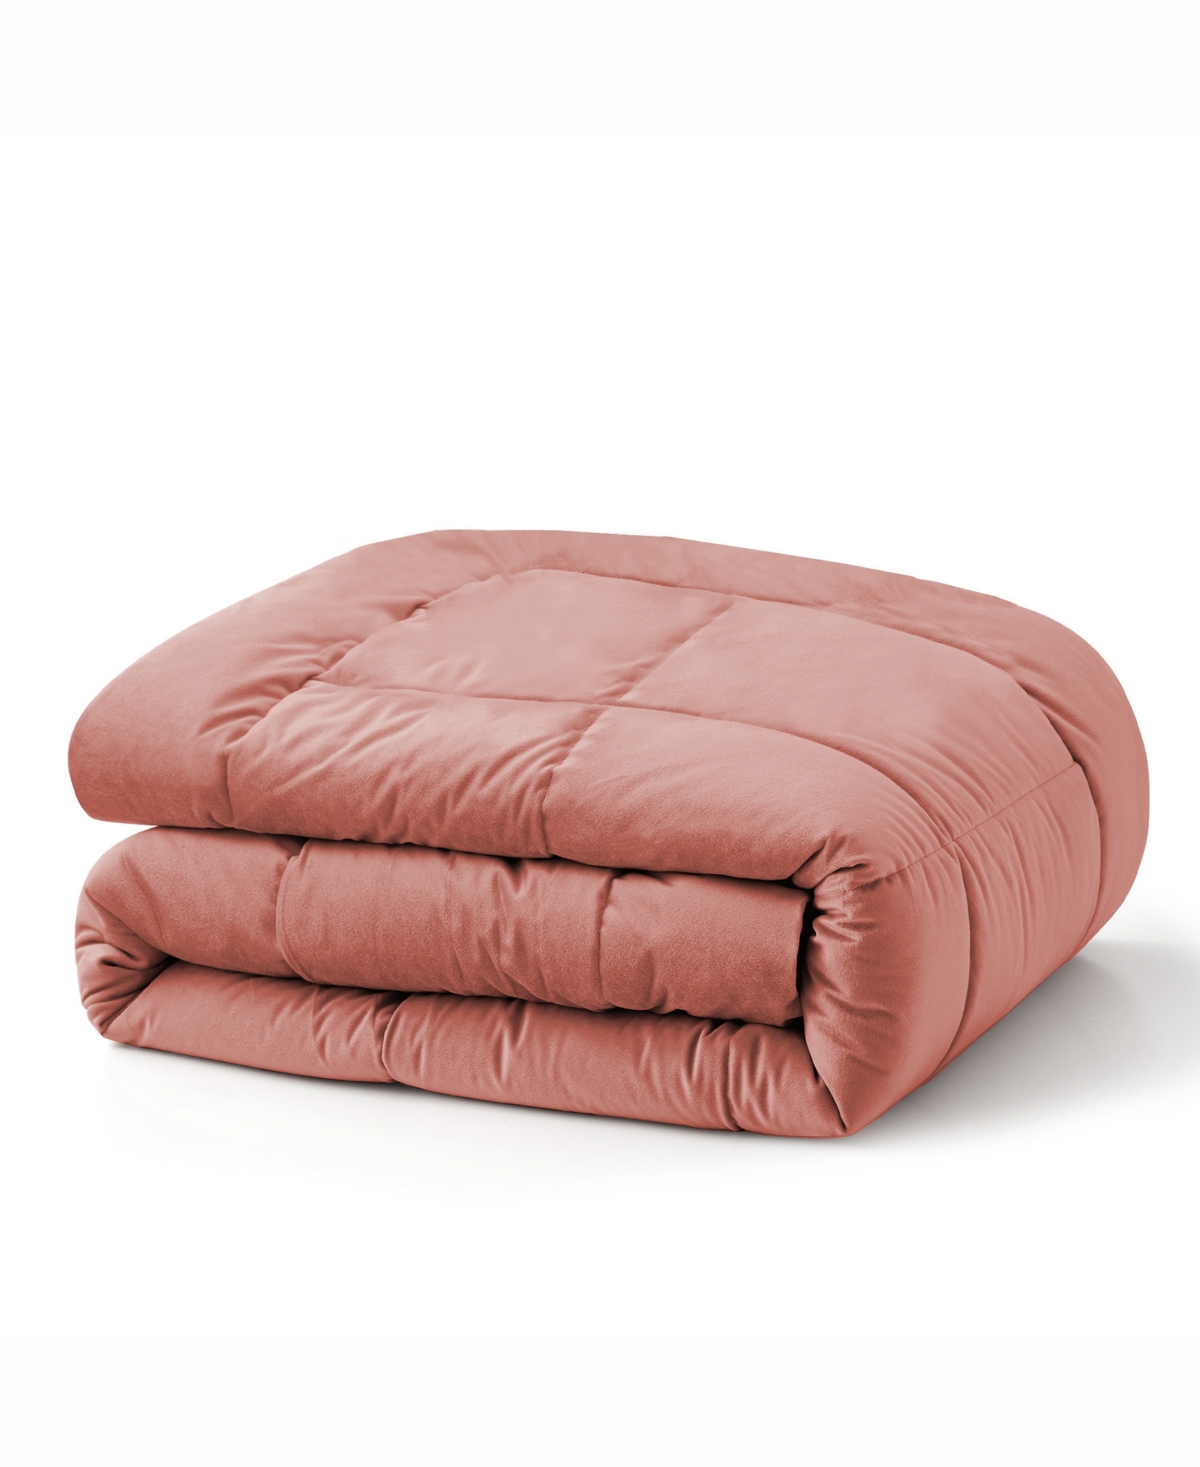 Unikome Plush Velet Quilted Down Alternative Comforter, King In Pink